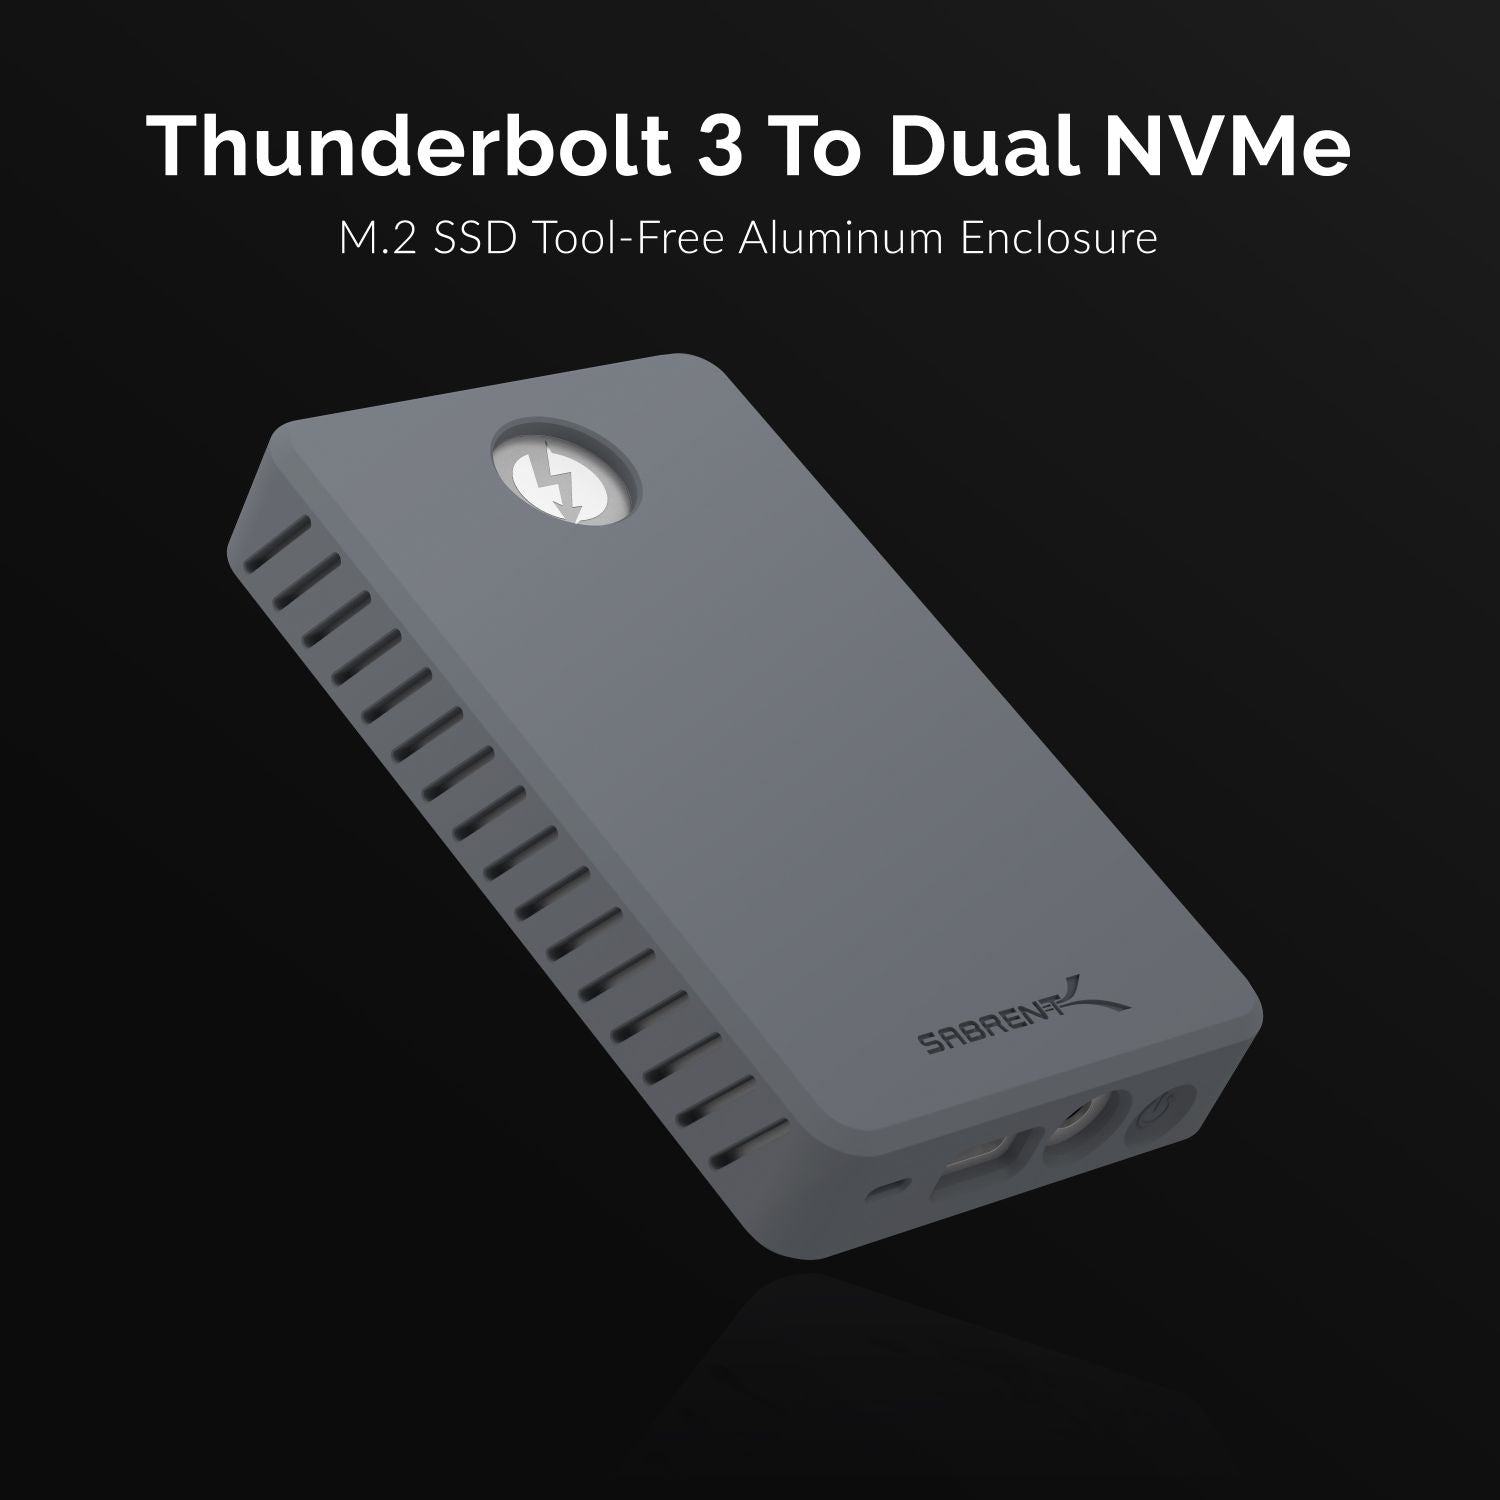 Thunderbolt 3 To M.2 SSD Tool-Free Enclosure - Sabrent